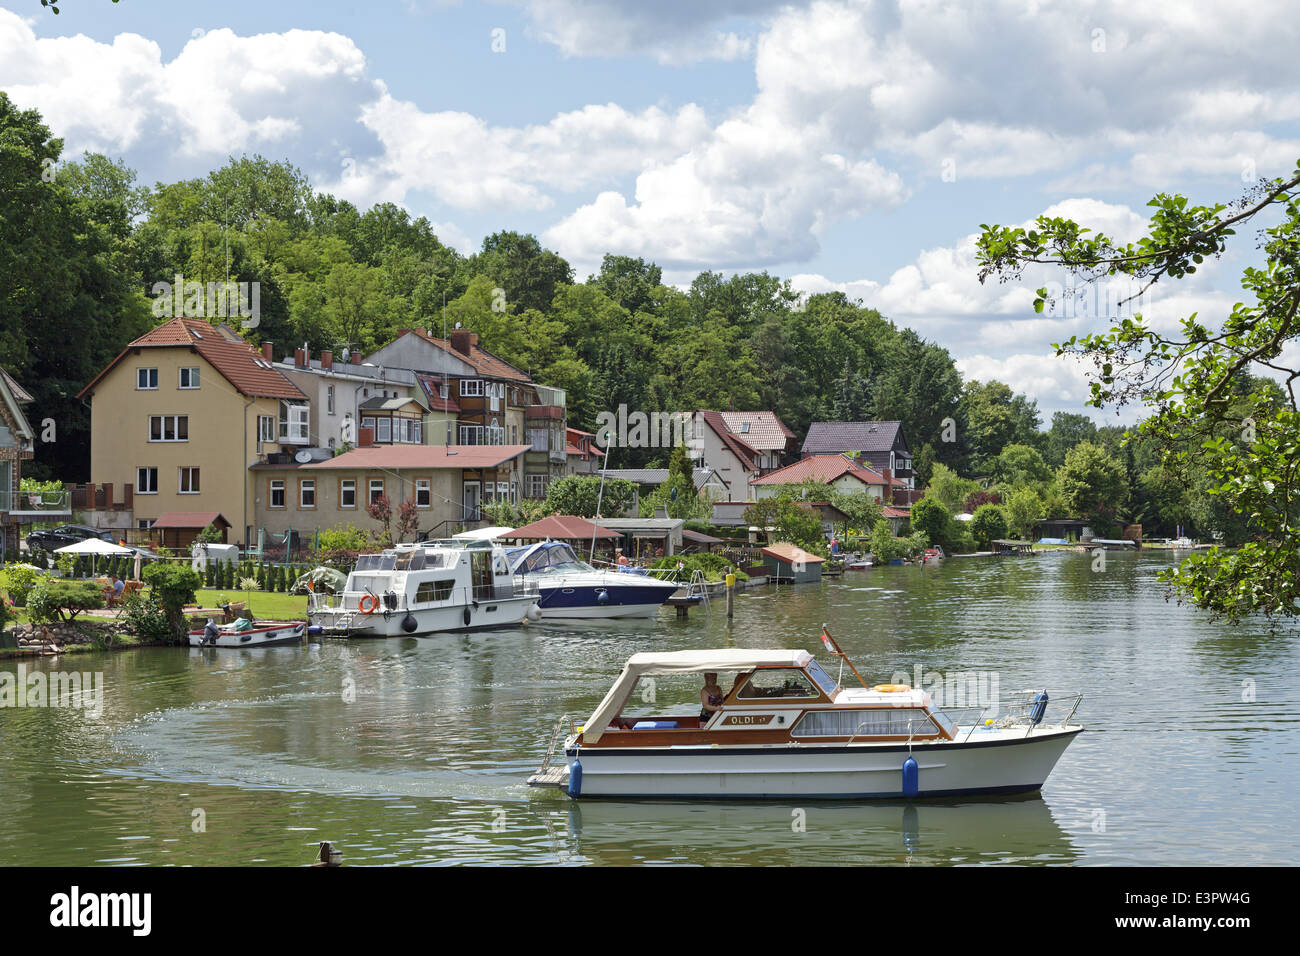 Stadtsee (Town Lake), Lychen, Uckermark, Brandenburg, Germany Stock Photo